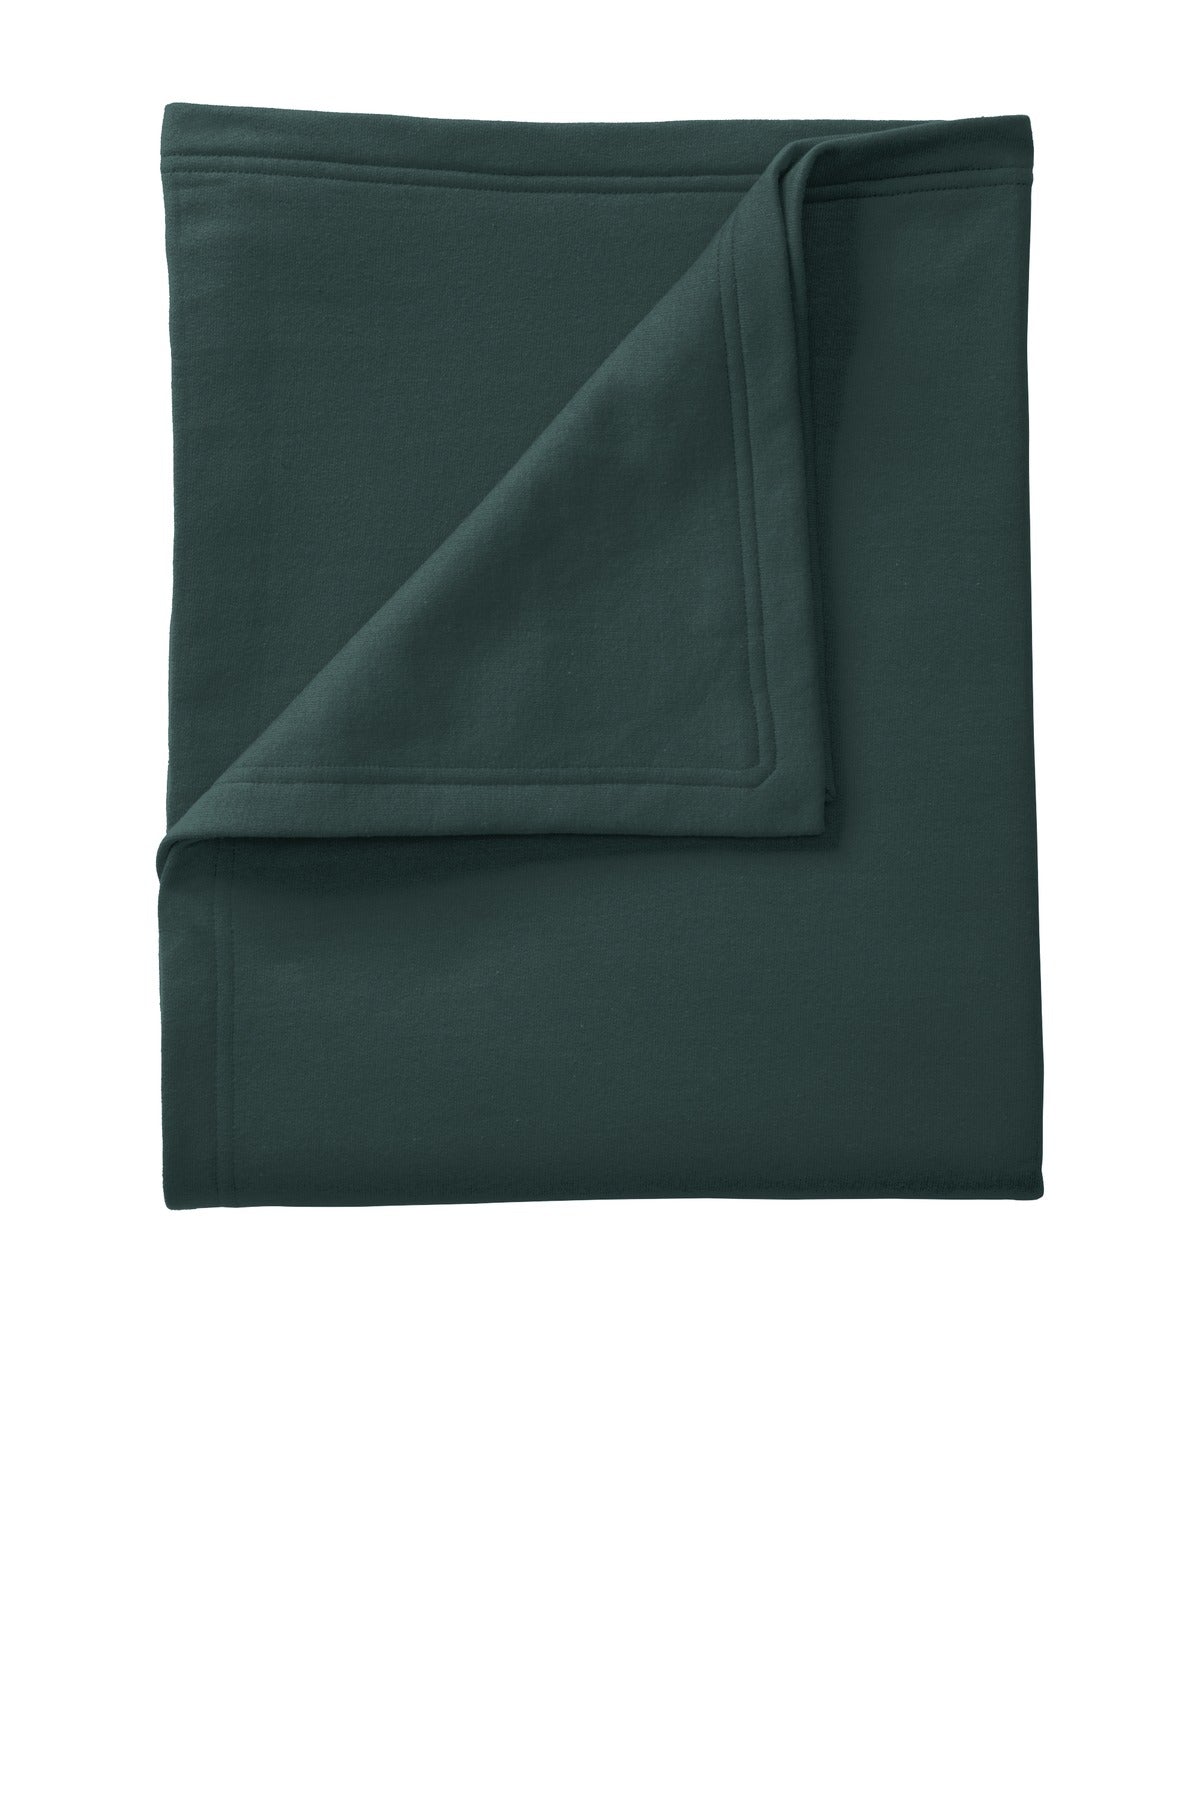 Port & Company® Core Fleece Sweatshirt Blanket. BP78 - DFW Impression